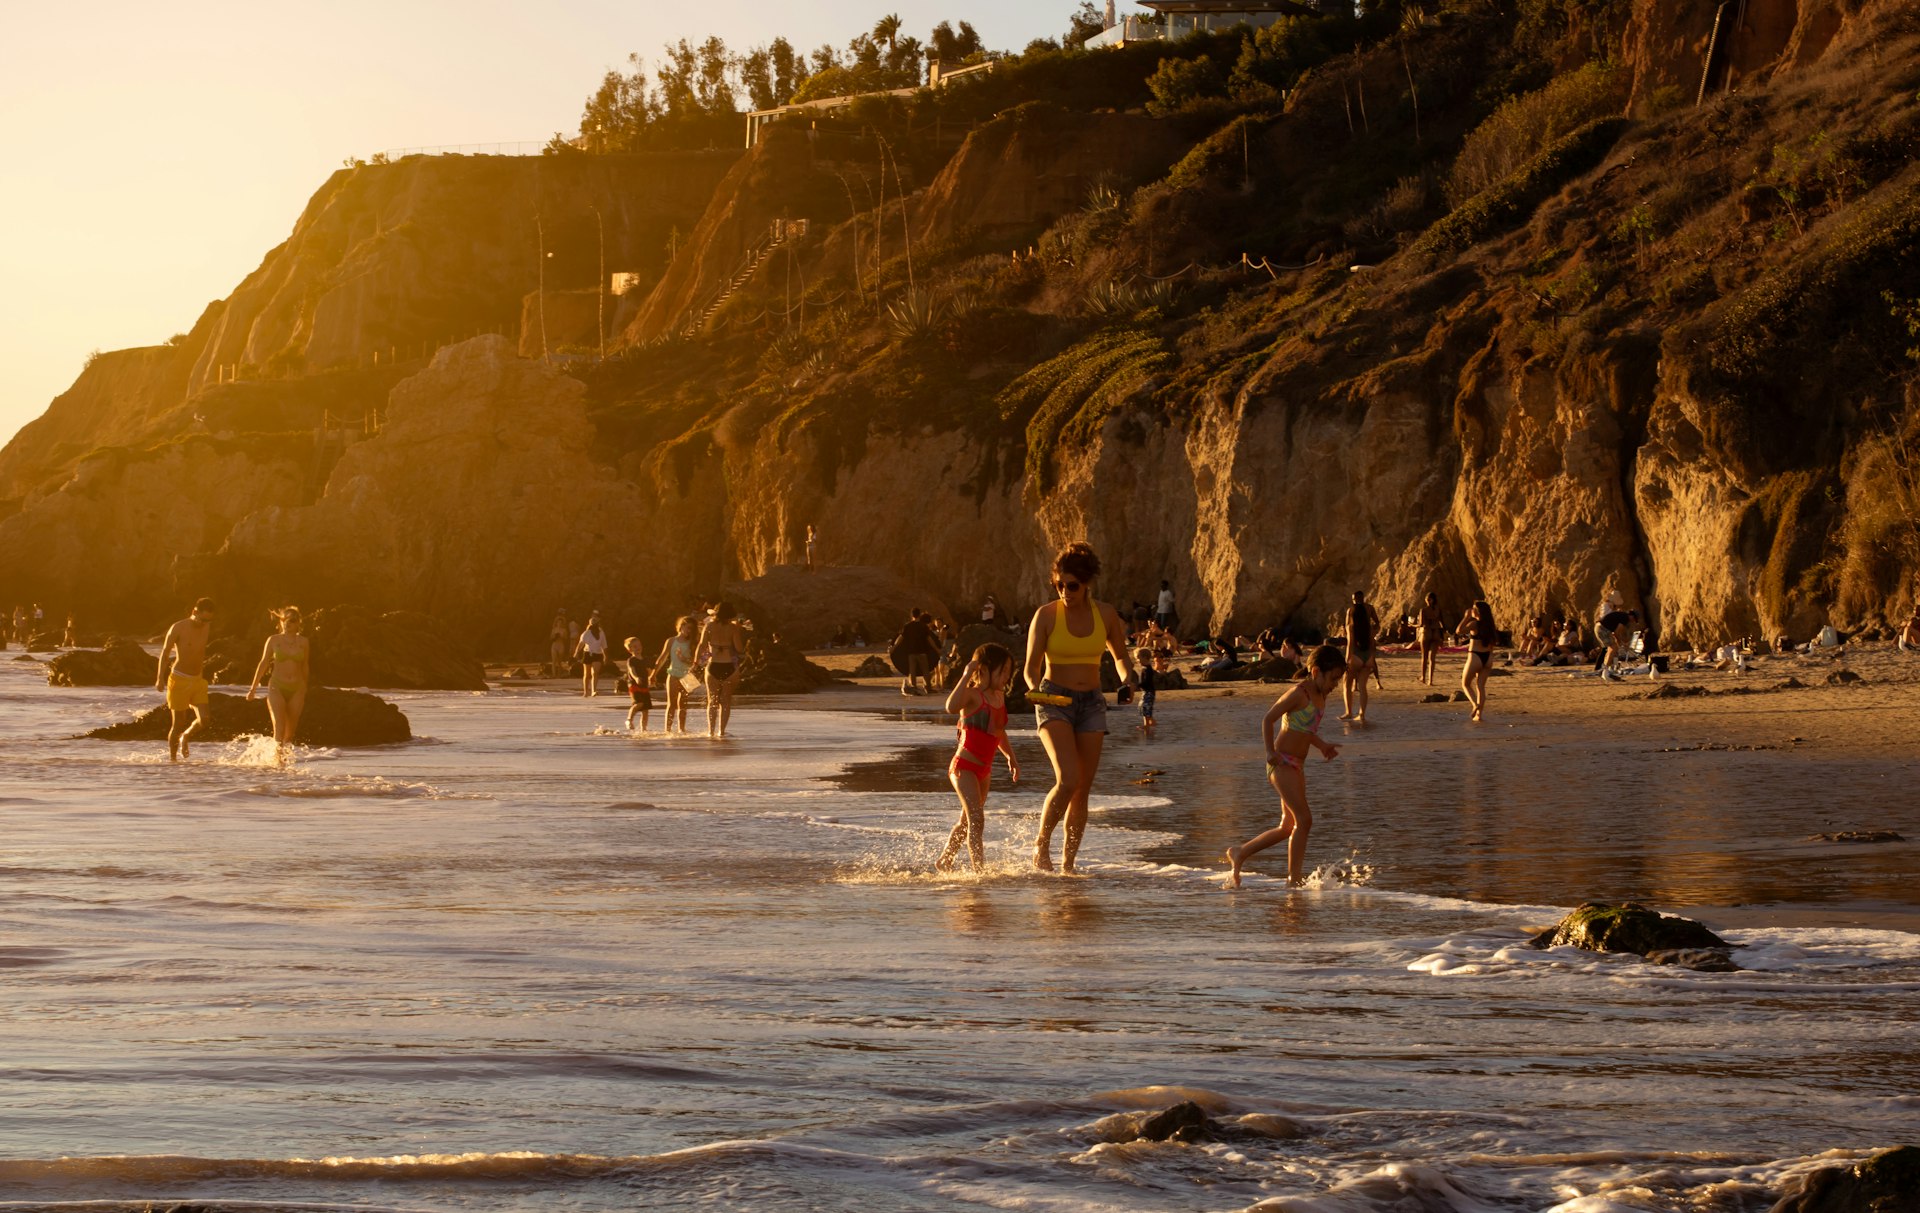 Sunset view of people having fun on El Matador Beach, Malibu, California, USA